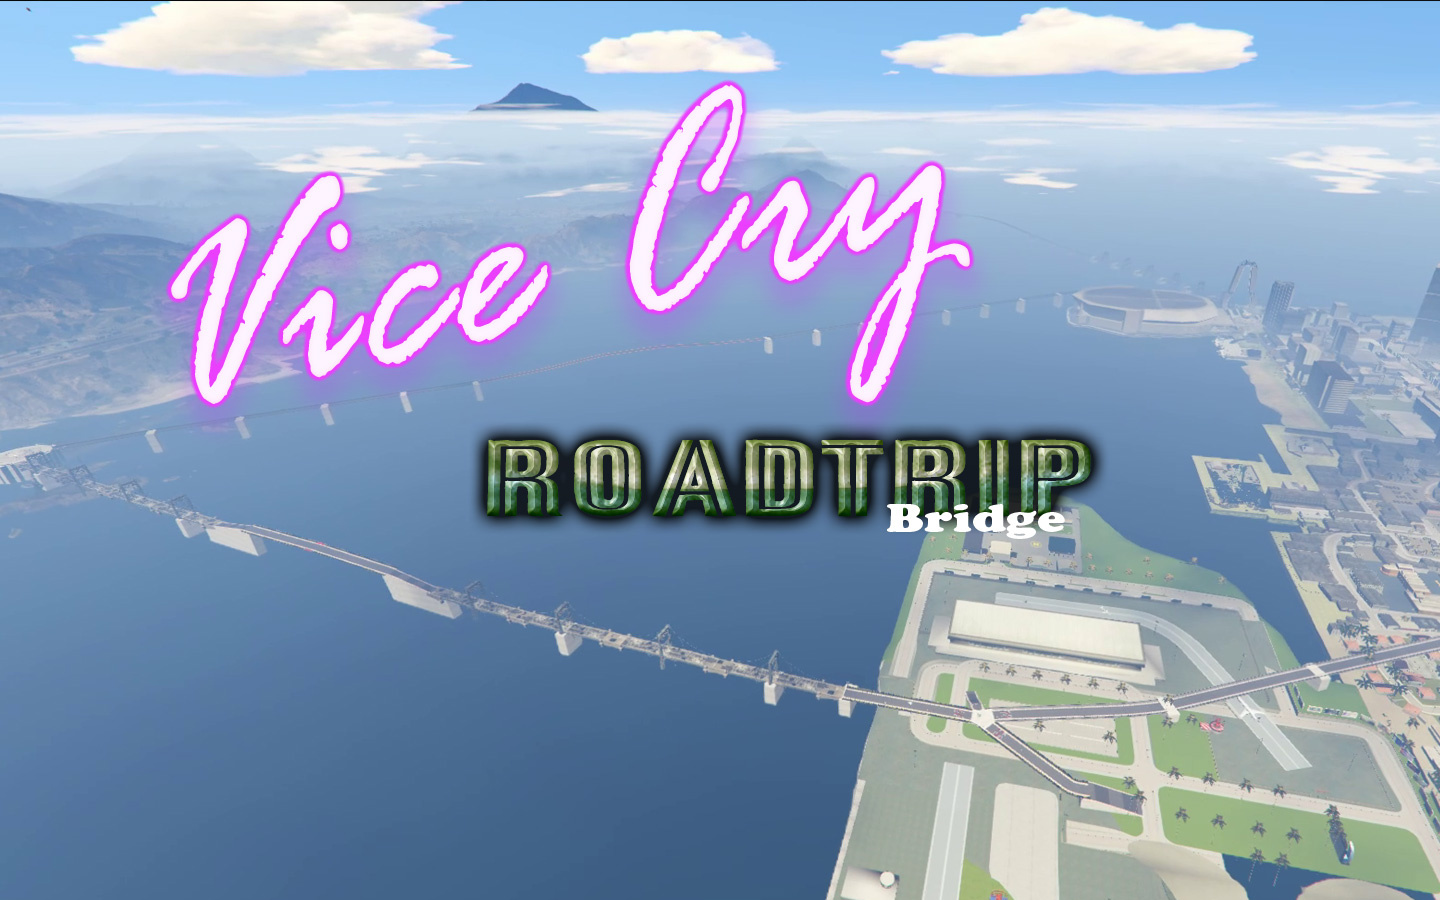 vice city mountain [Grand Theft Auto: Vice City] [Mods]